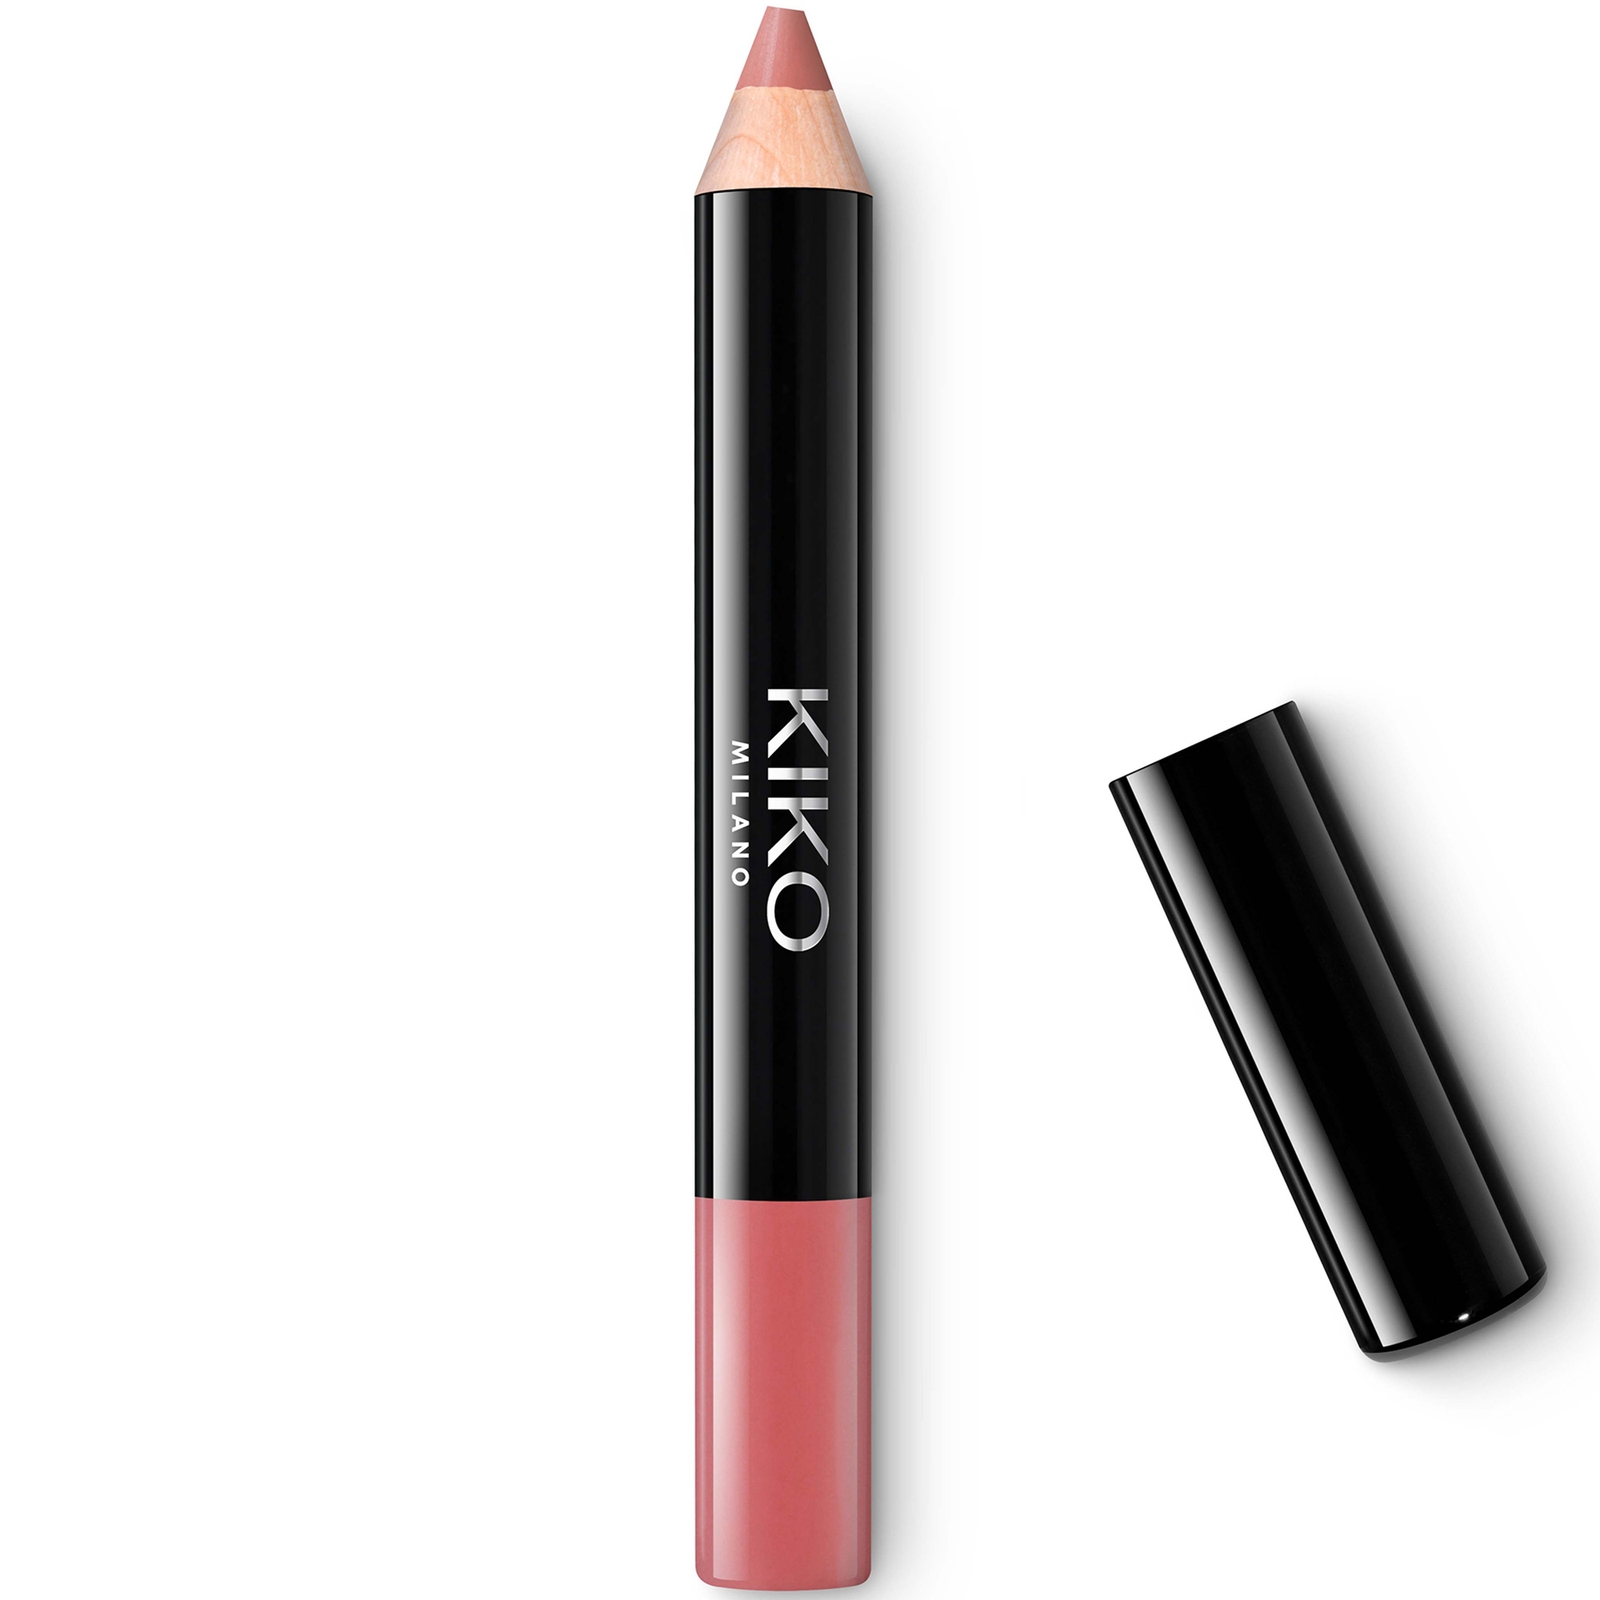 KIKO Milano Smart Fusion Creamy Lip Crayon 1.6g (Various Shades) - 04 Intense Hazelnut